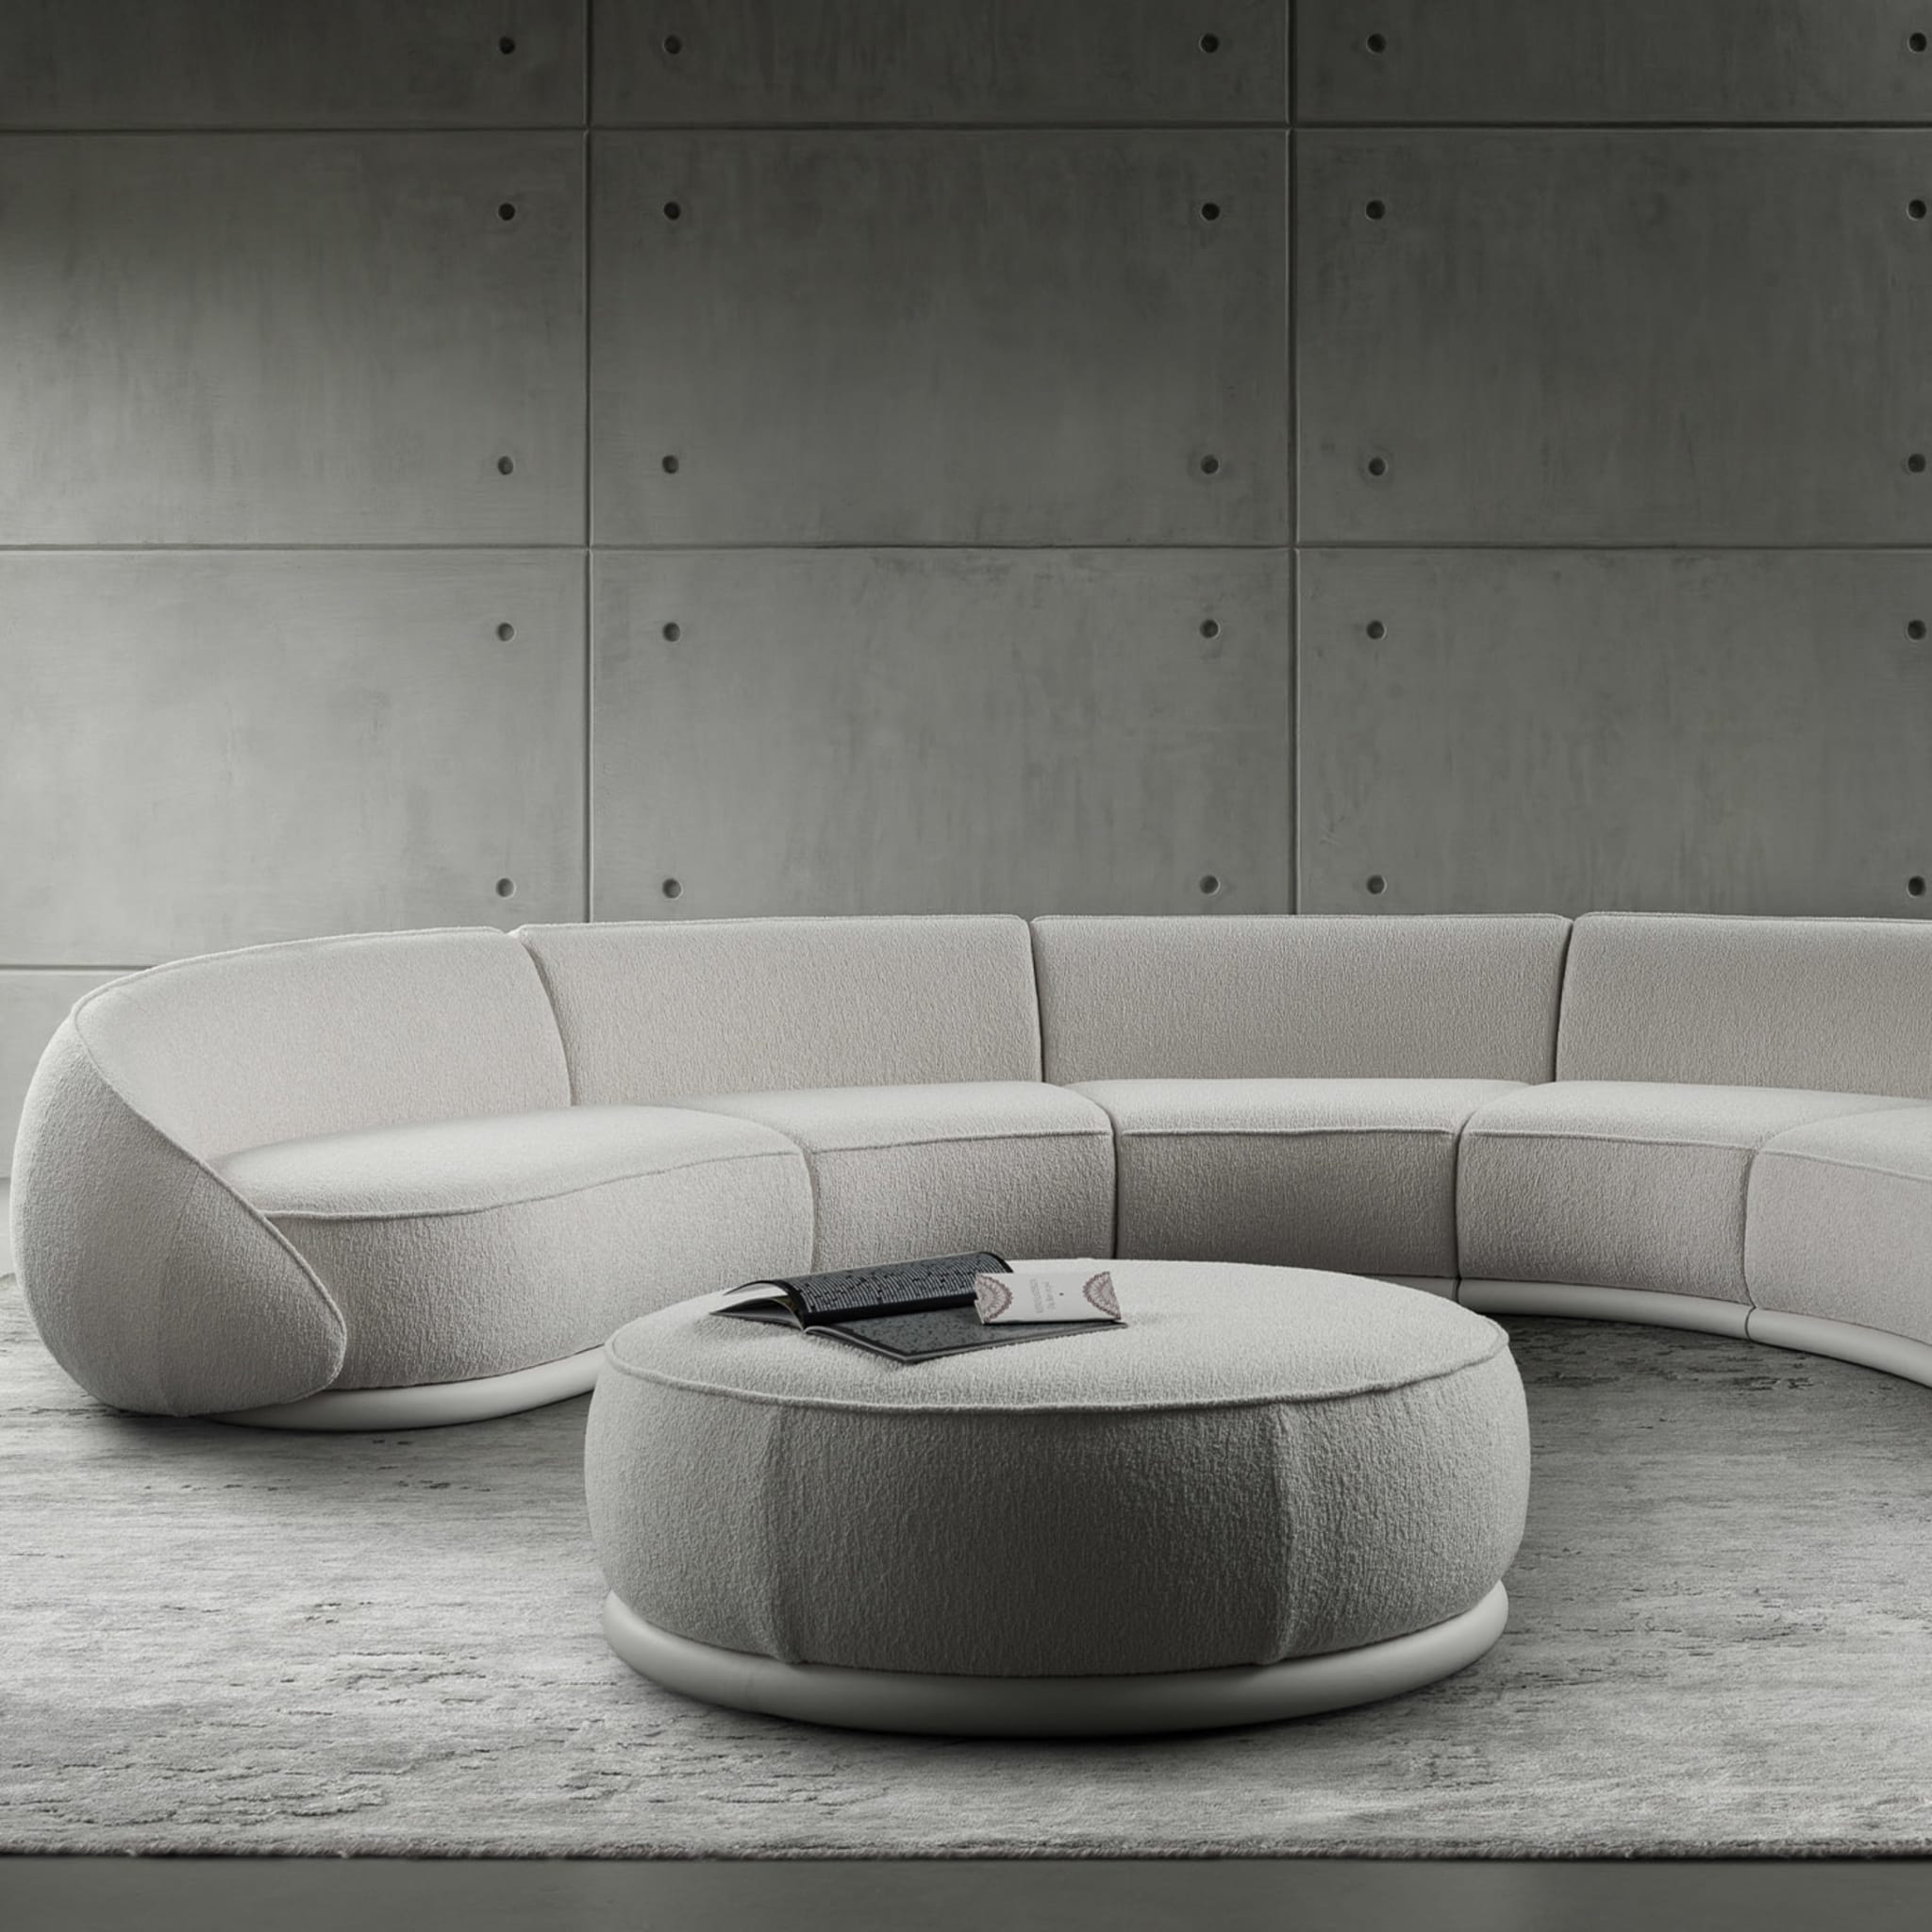 Abbracci 4-Module White Sofa by Lorenza Bozzoli - Alternative view 3